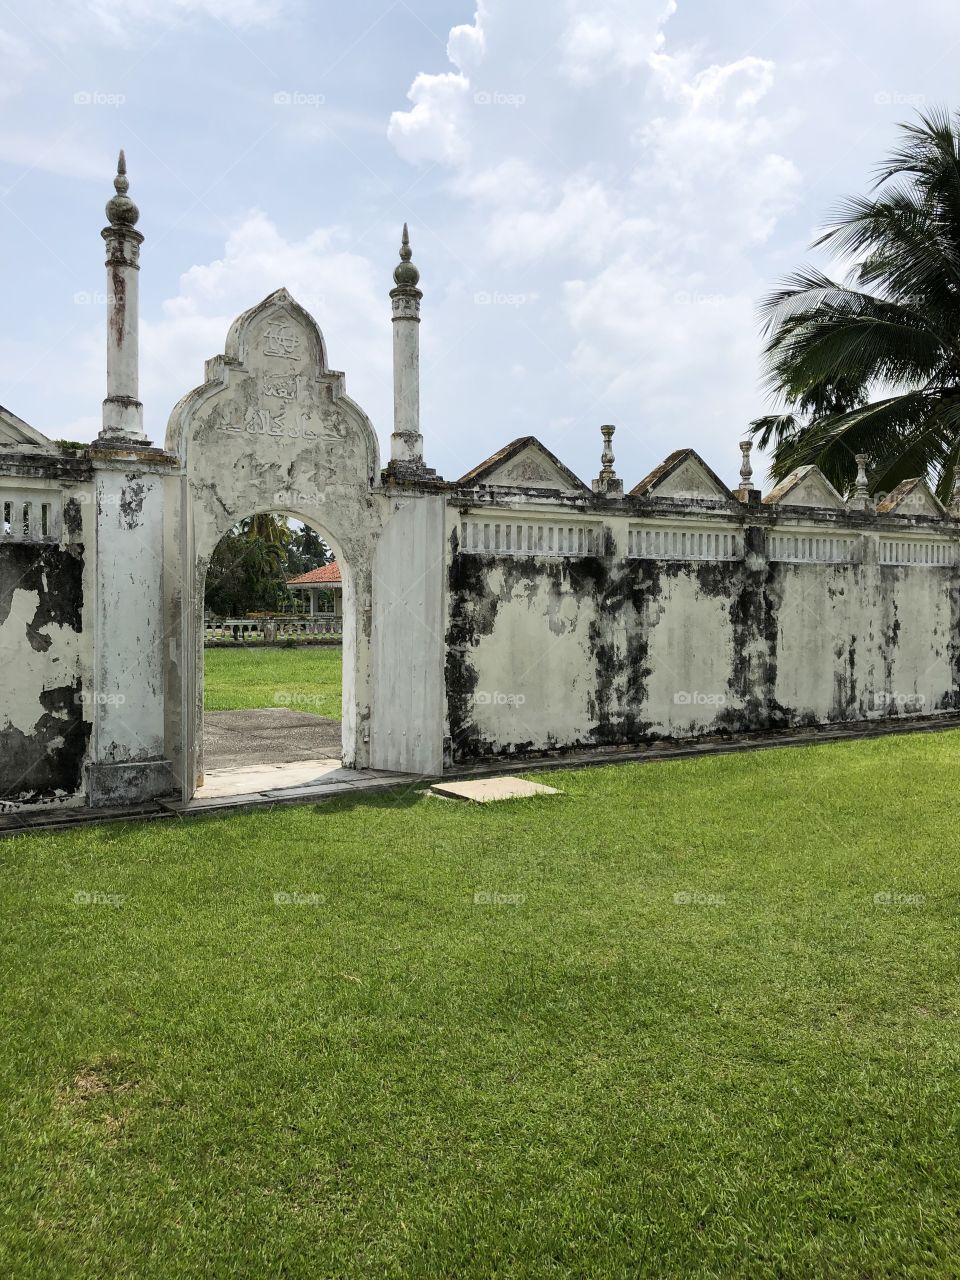 An abandoned castle. A memoir of Malay Royalties.